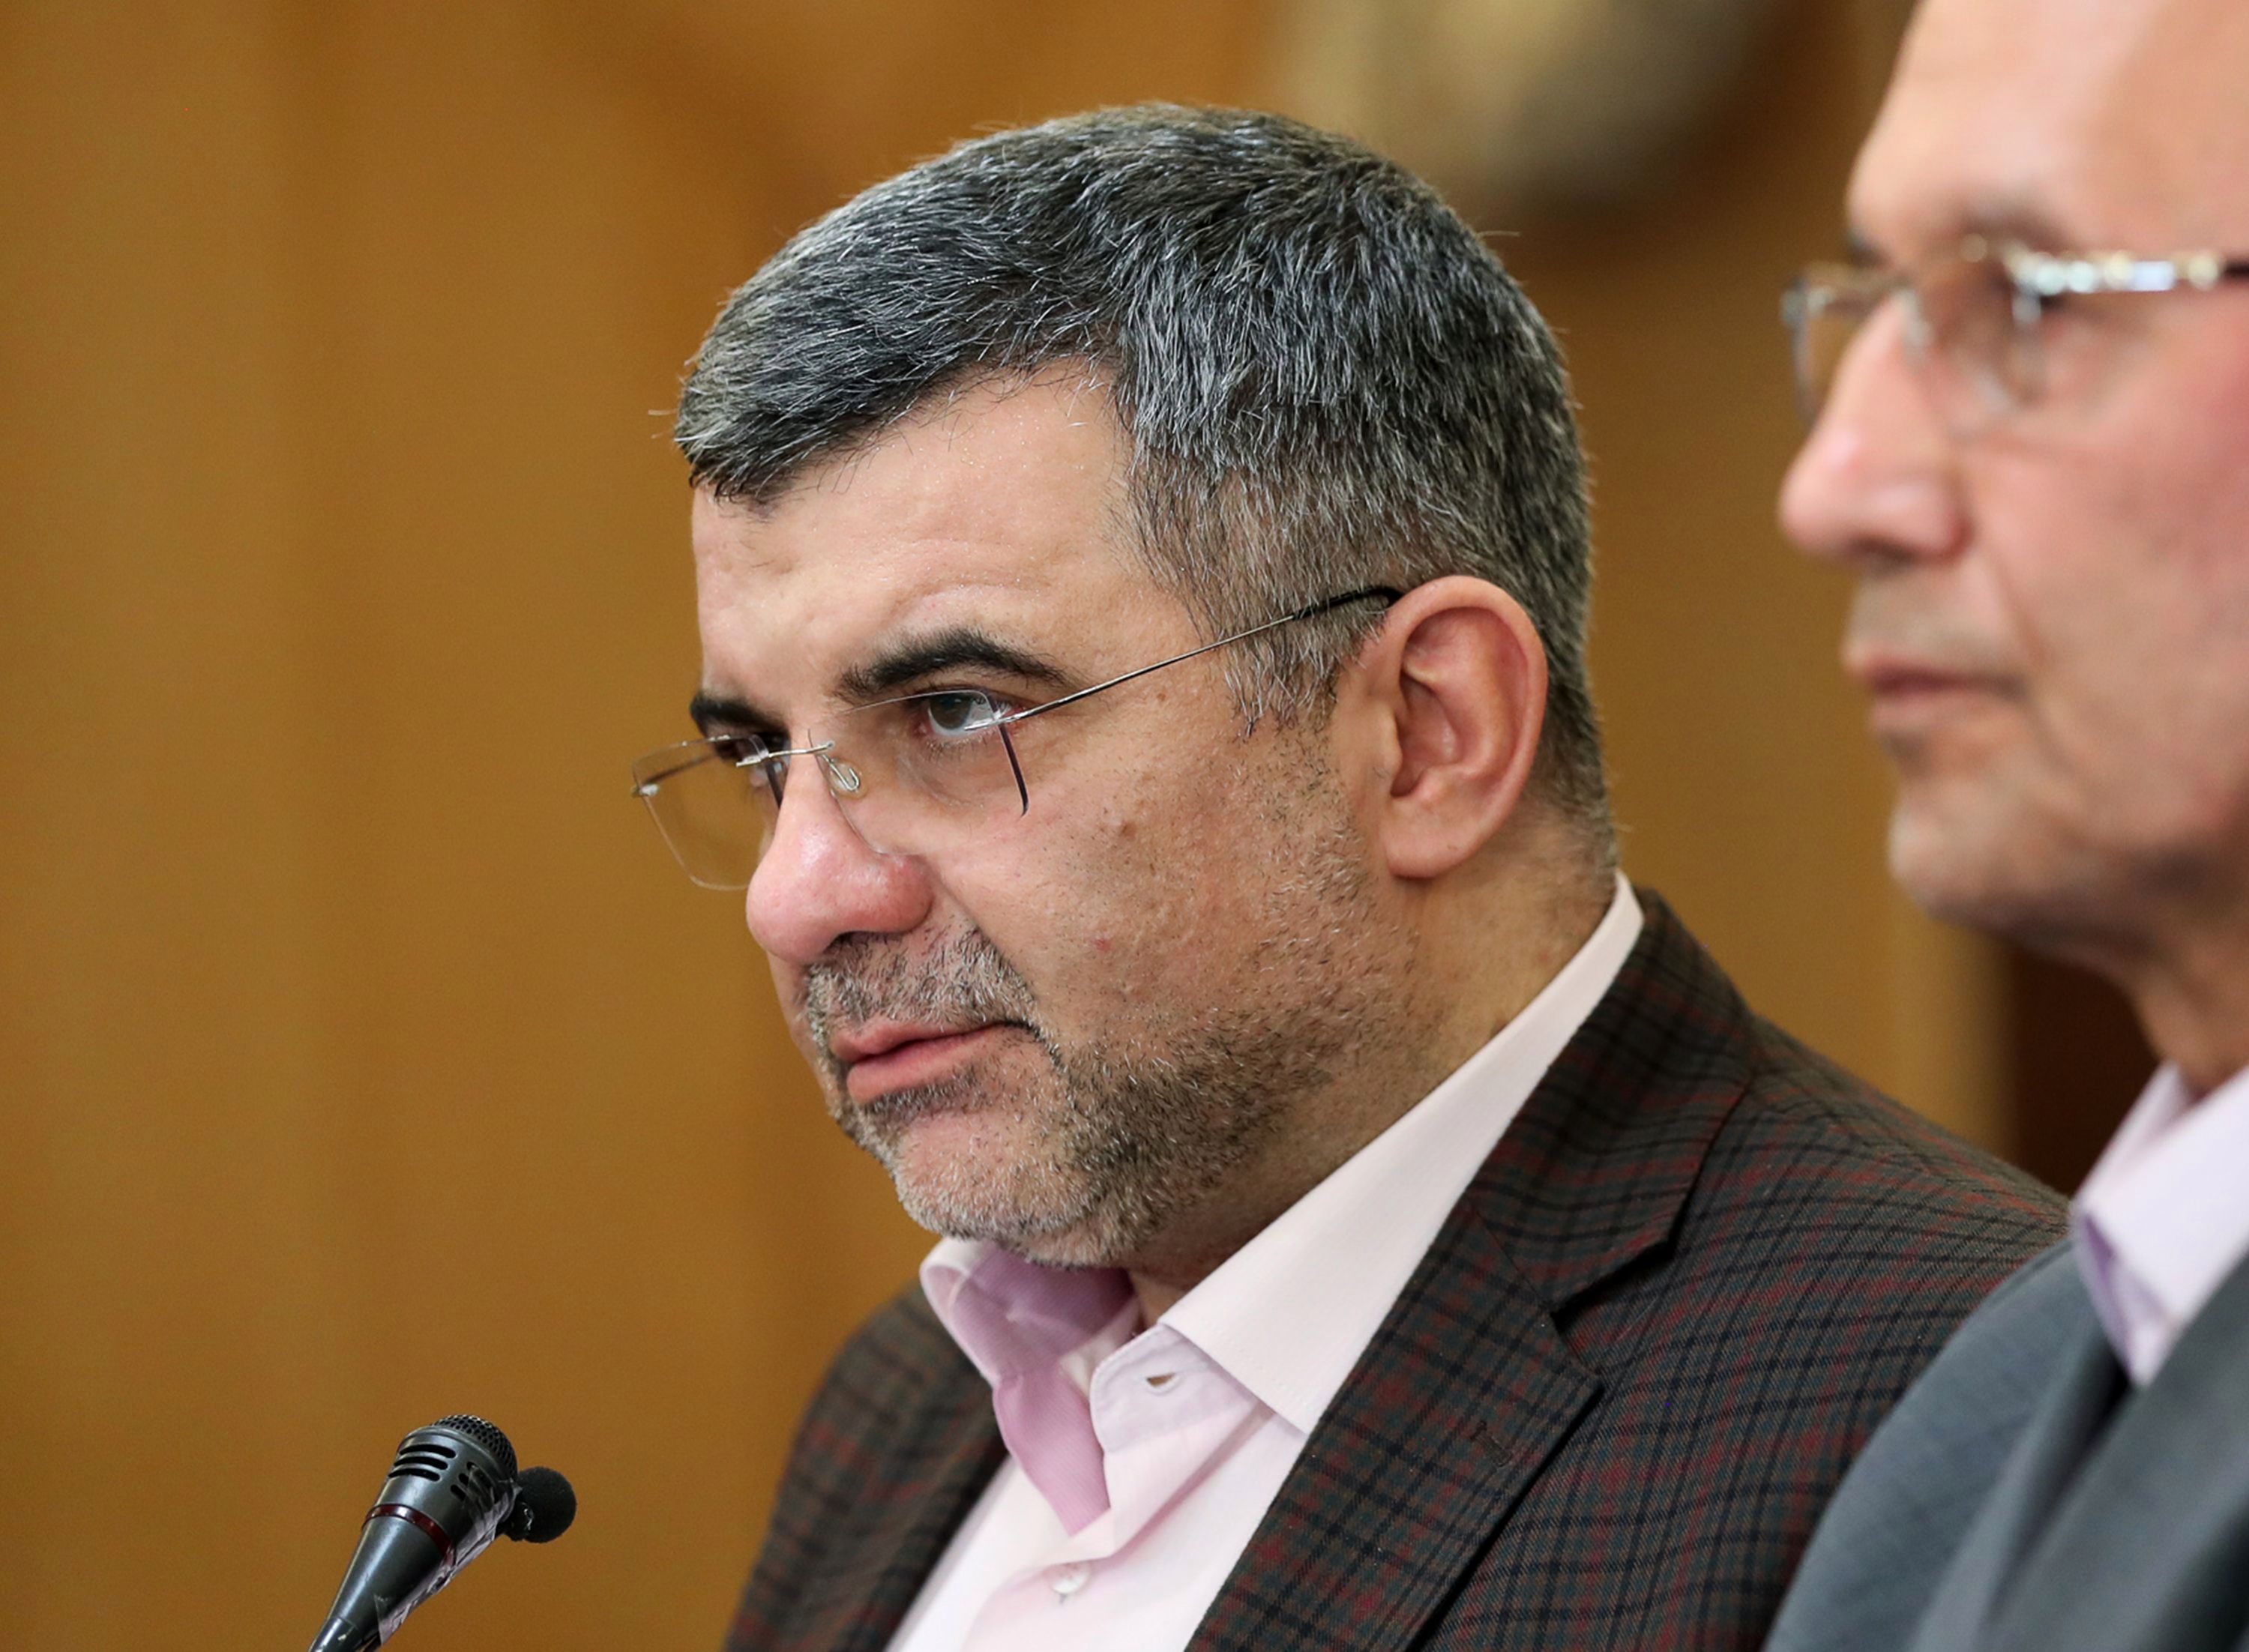 Iran deputy health minister has coronavirus